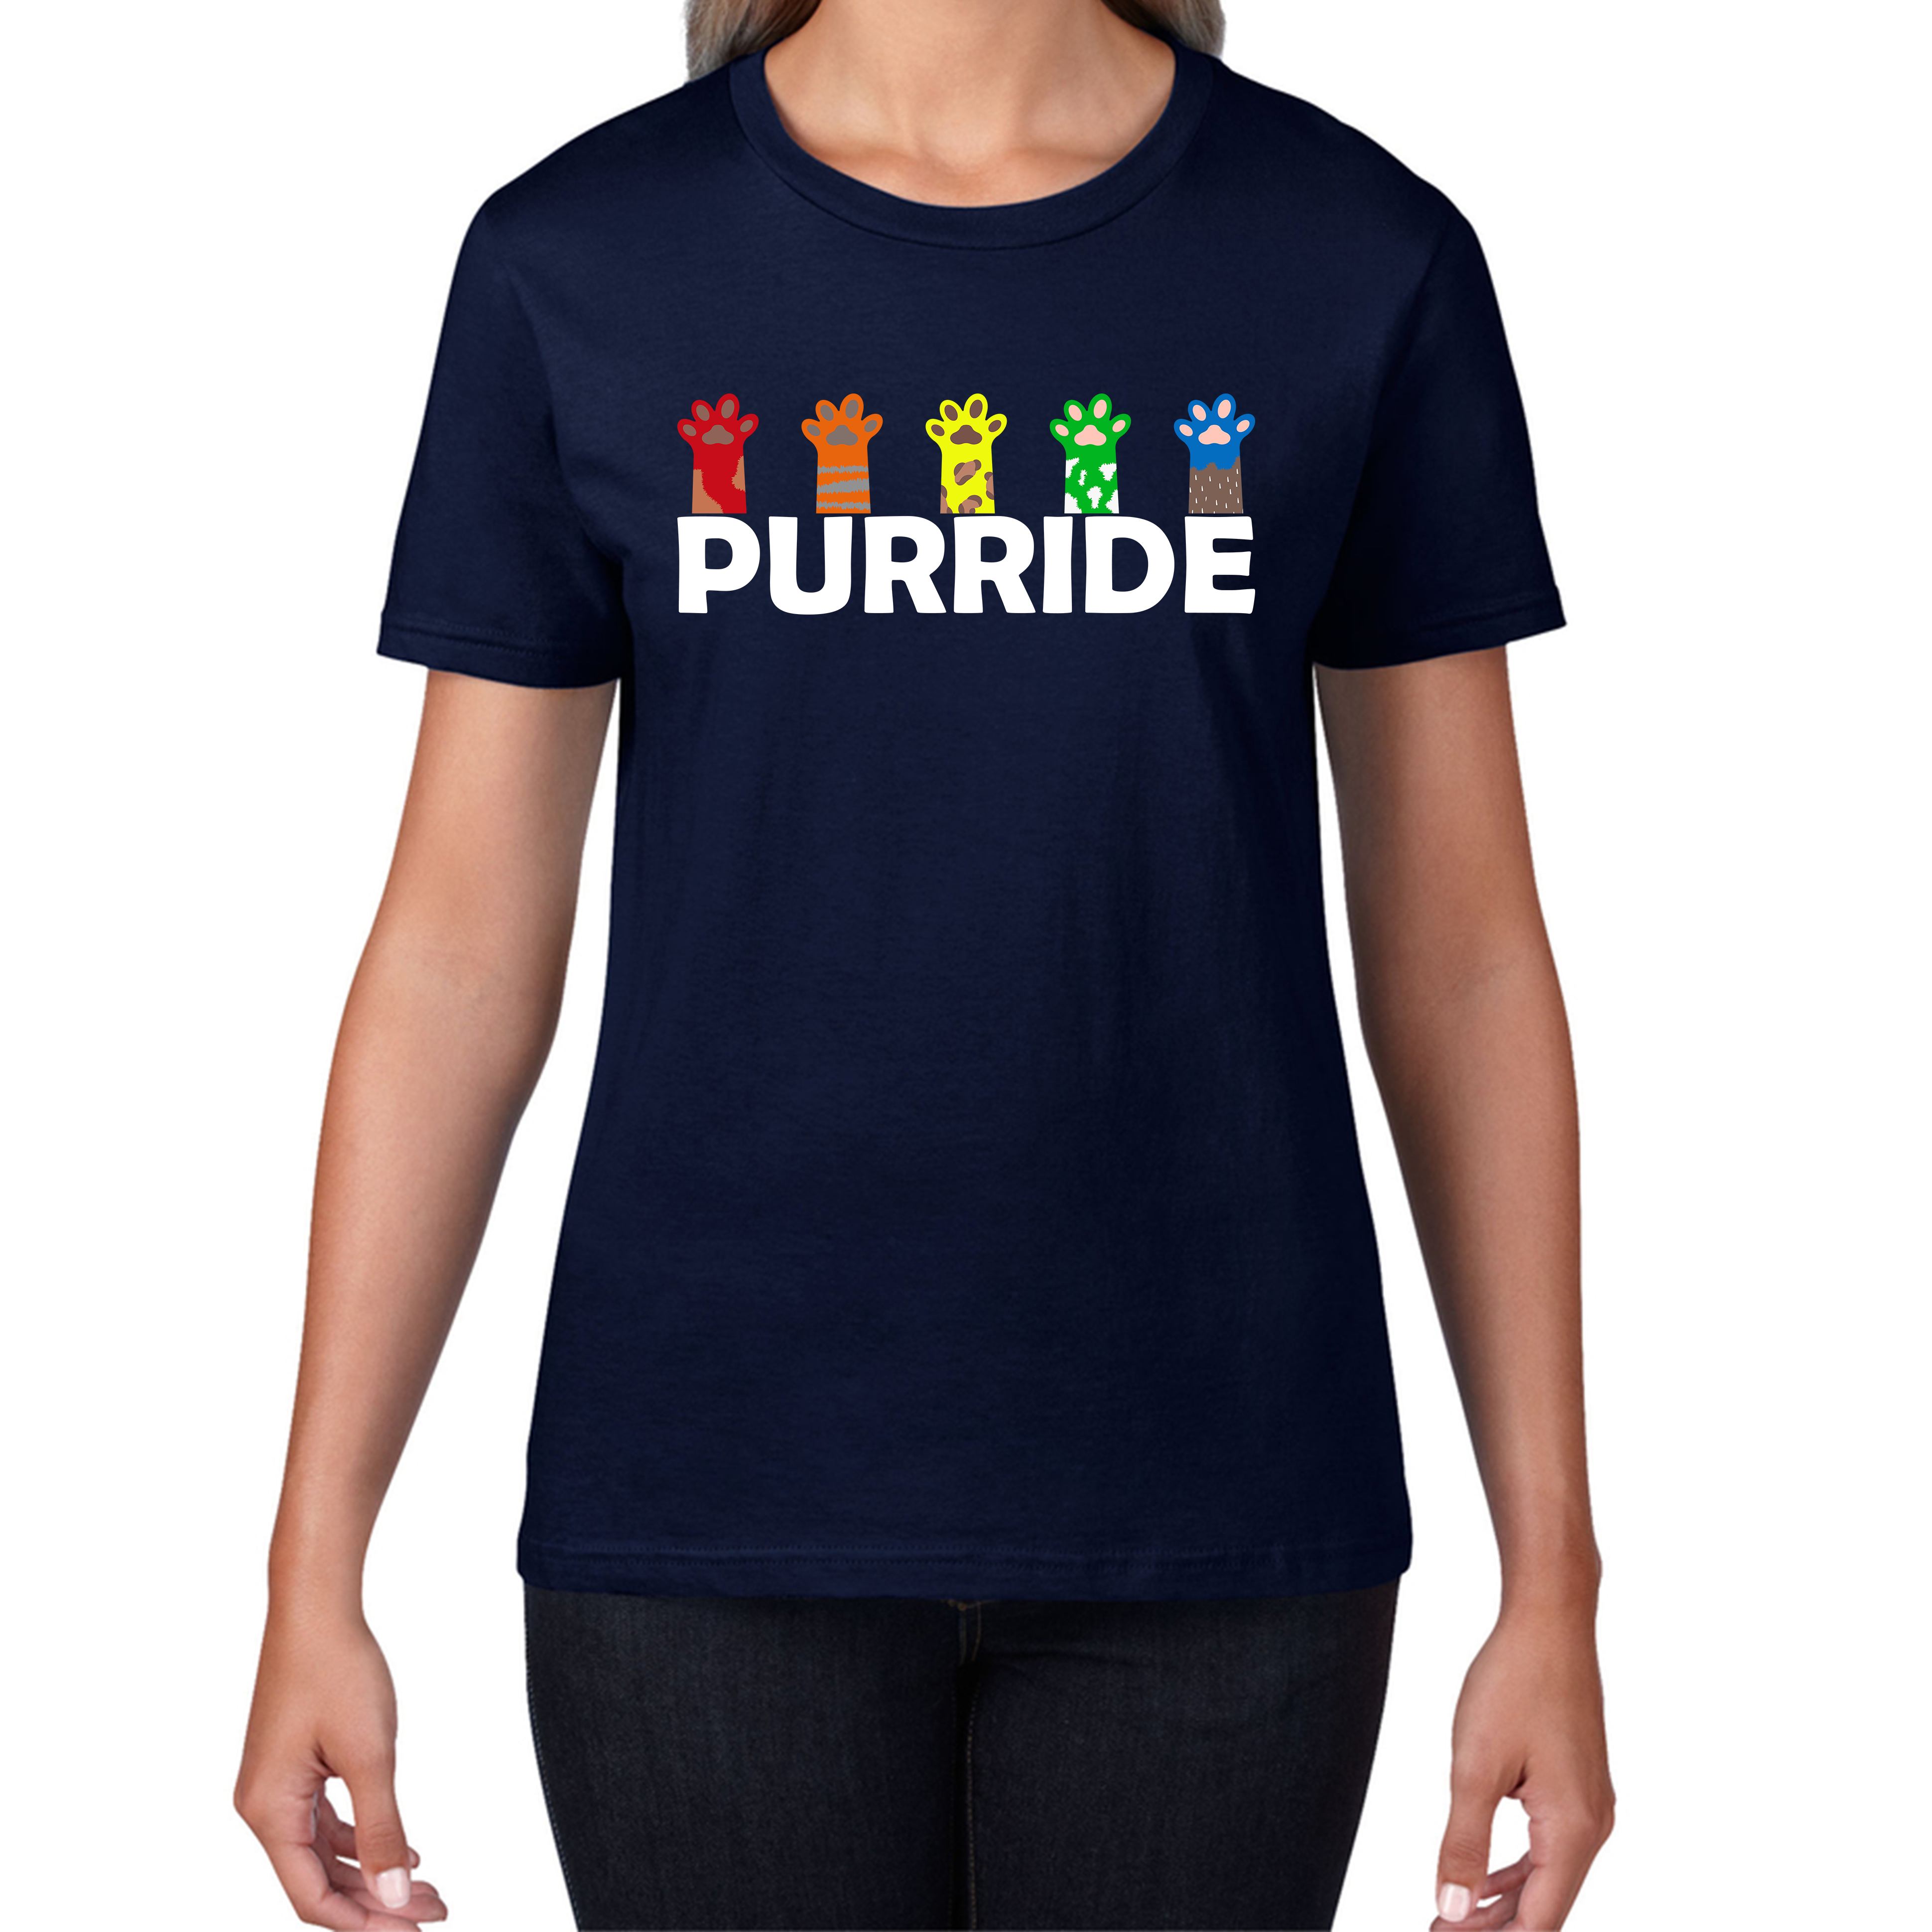 Purride Funny Cat Lovers LGBT T-Shirt Pride Awareness Gay Lesbians Pet Animal Womens Tee Top